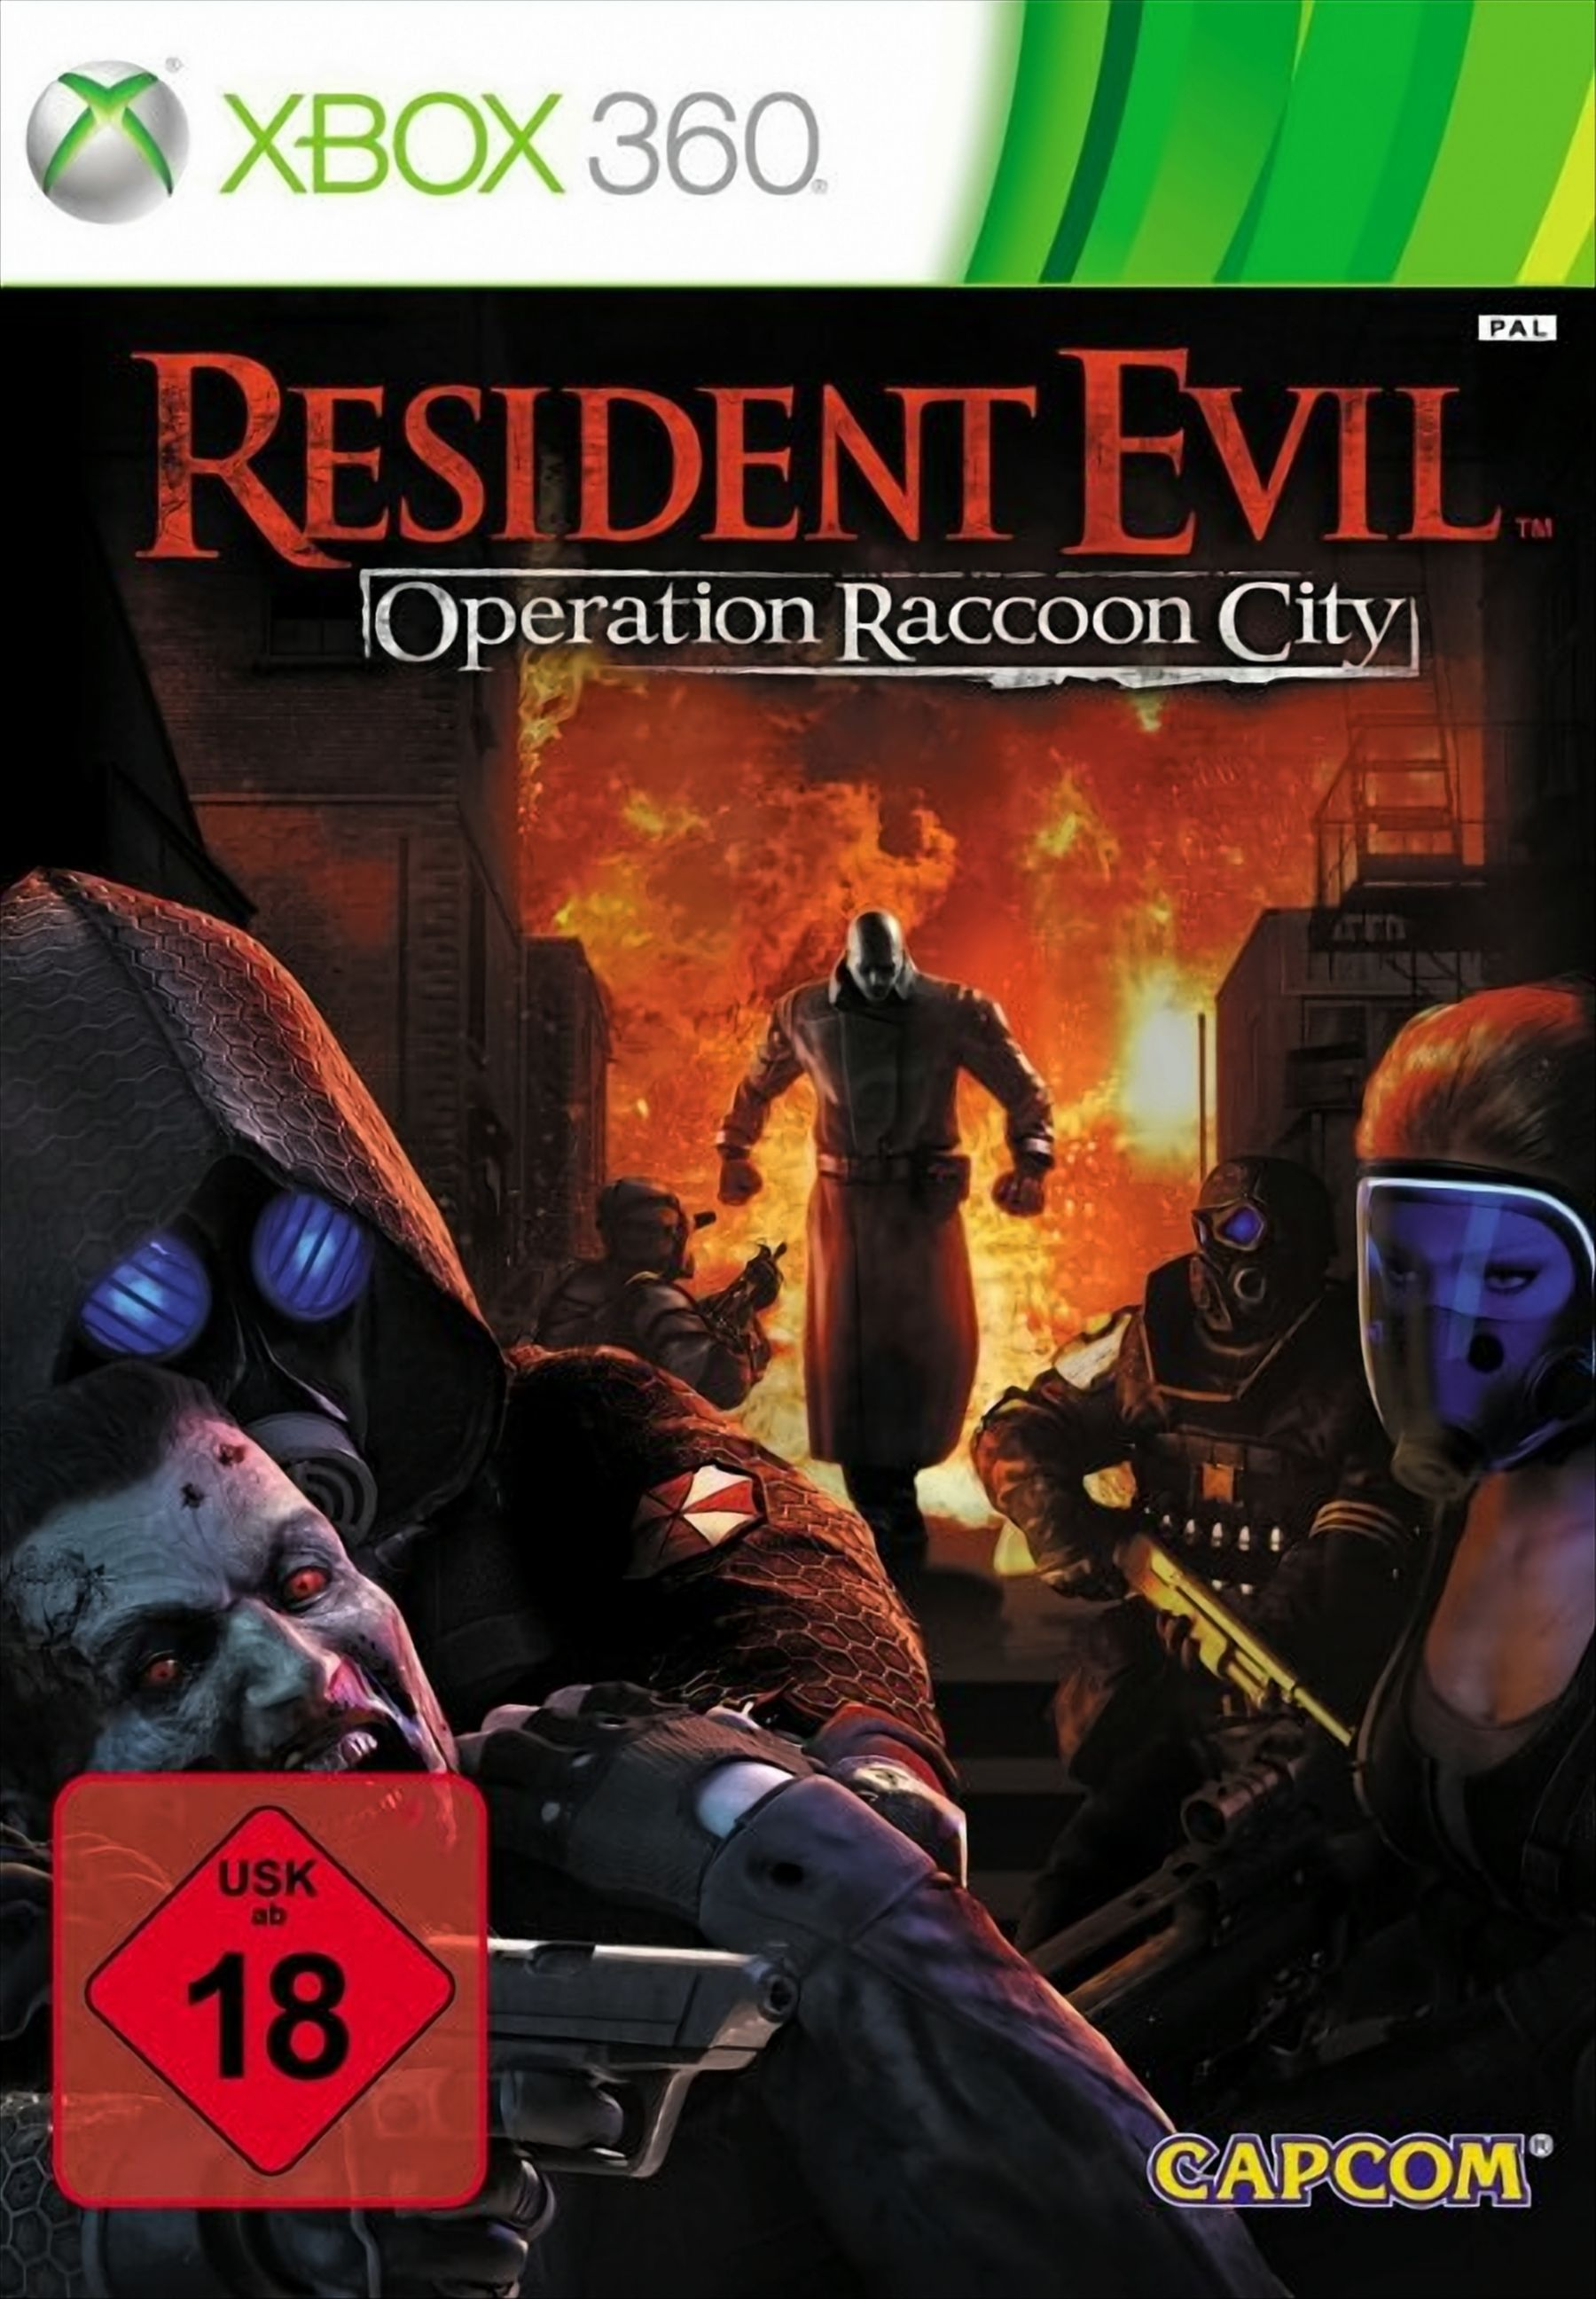 Resident Evil: Operation Raccoon City - 360] [Xbox